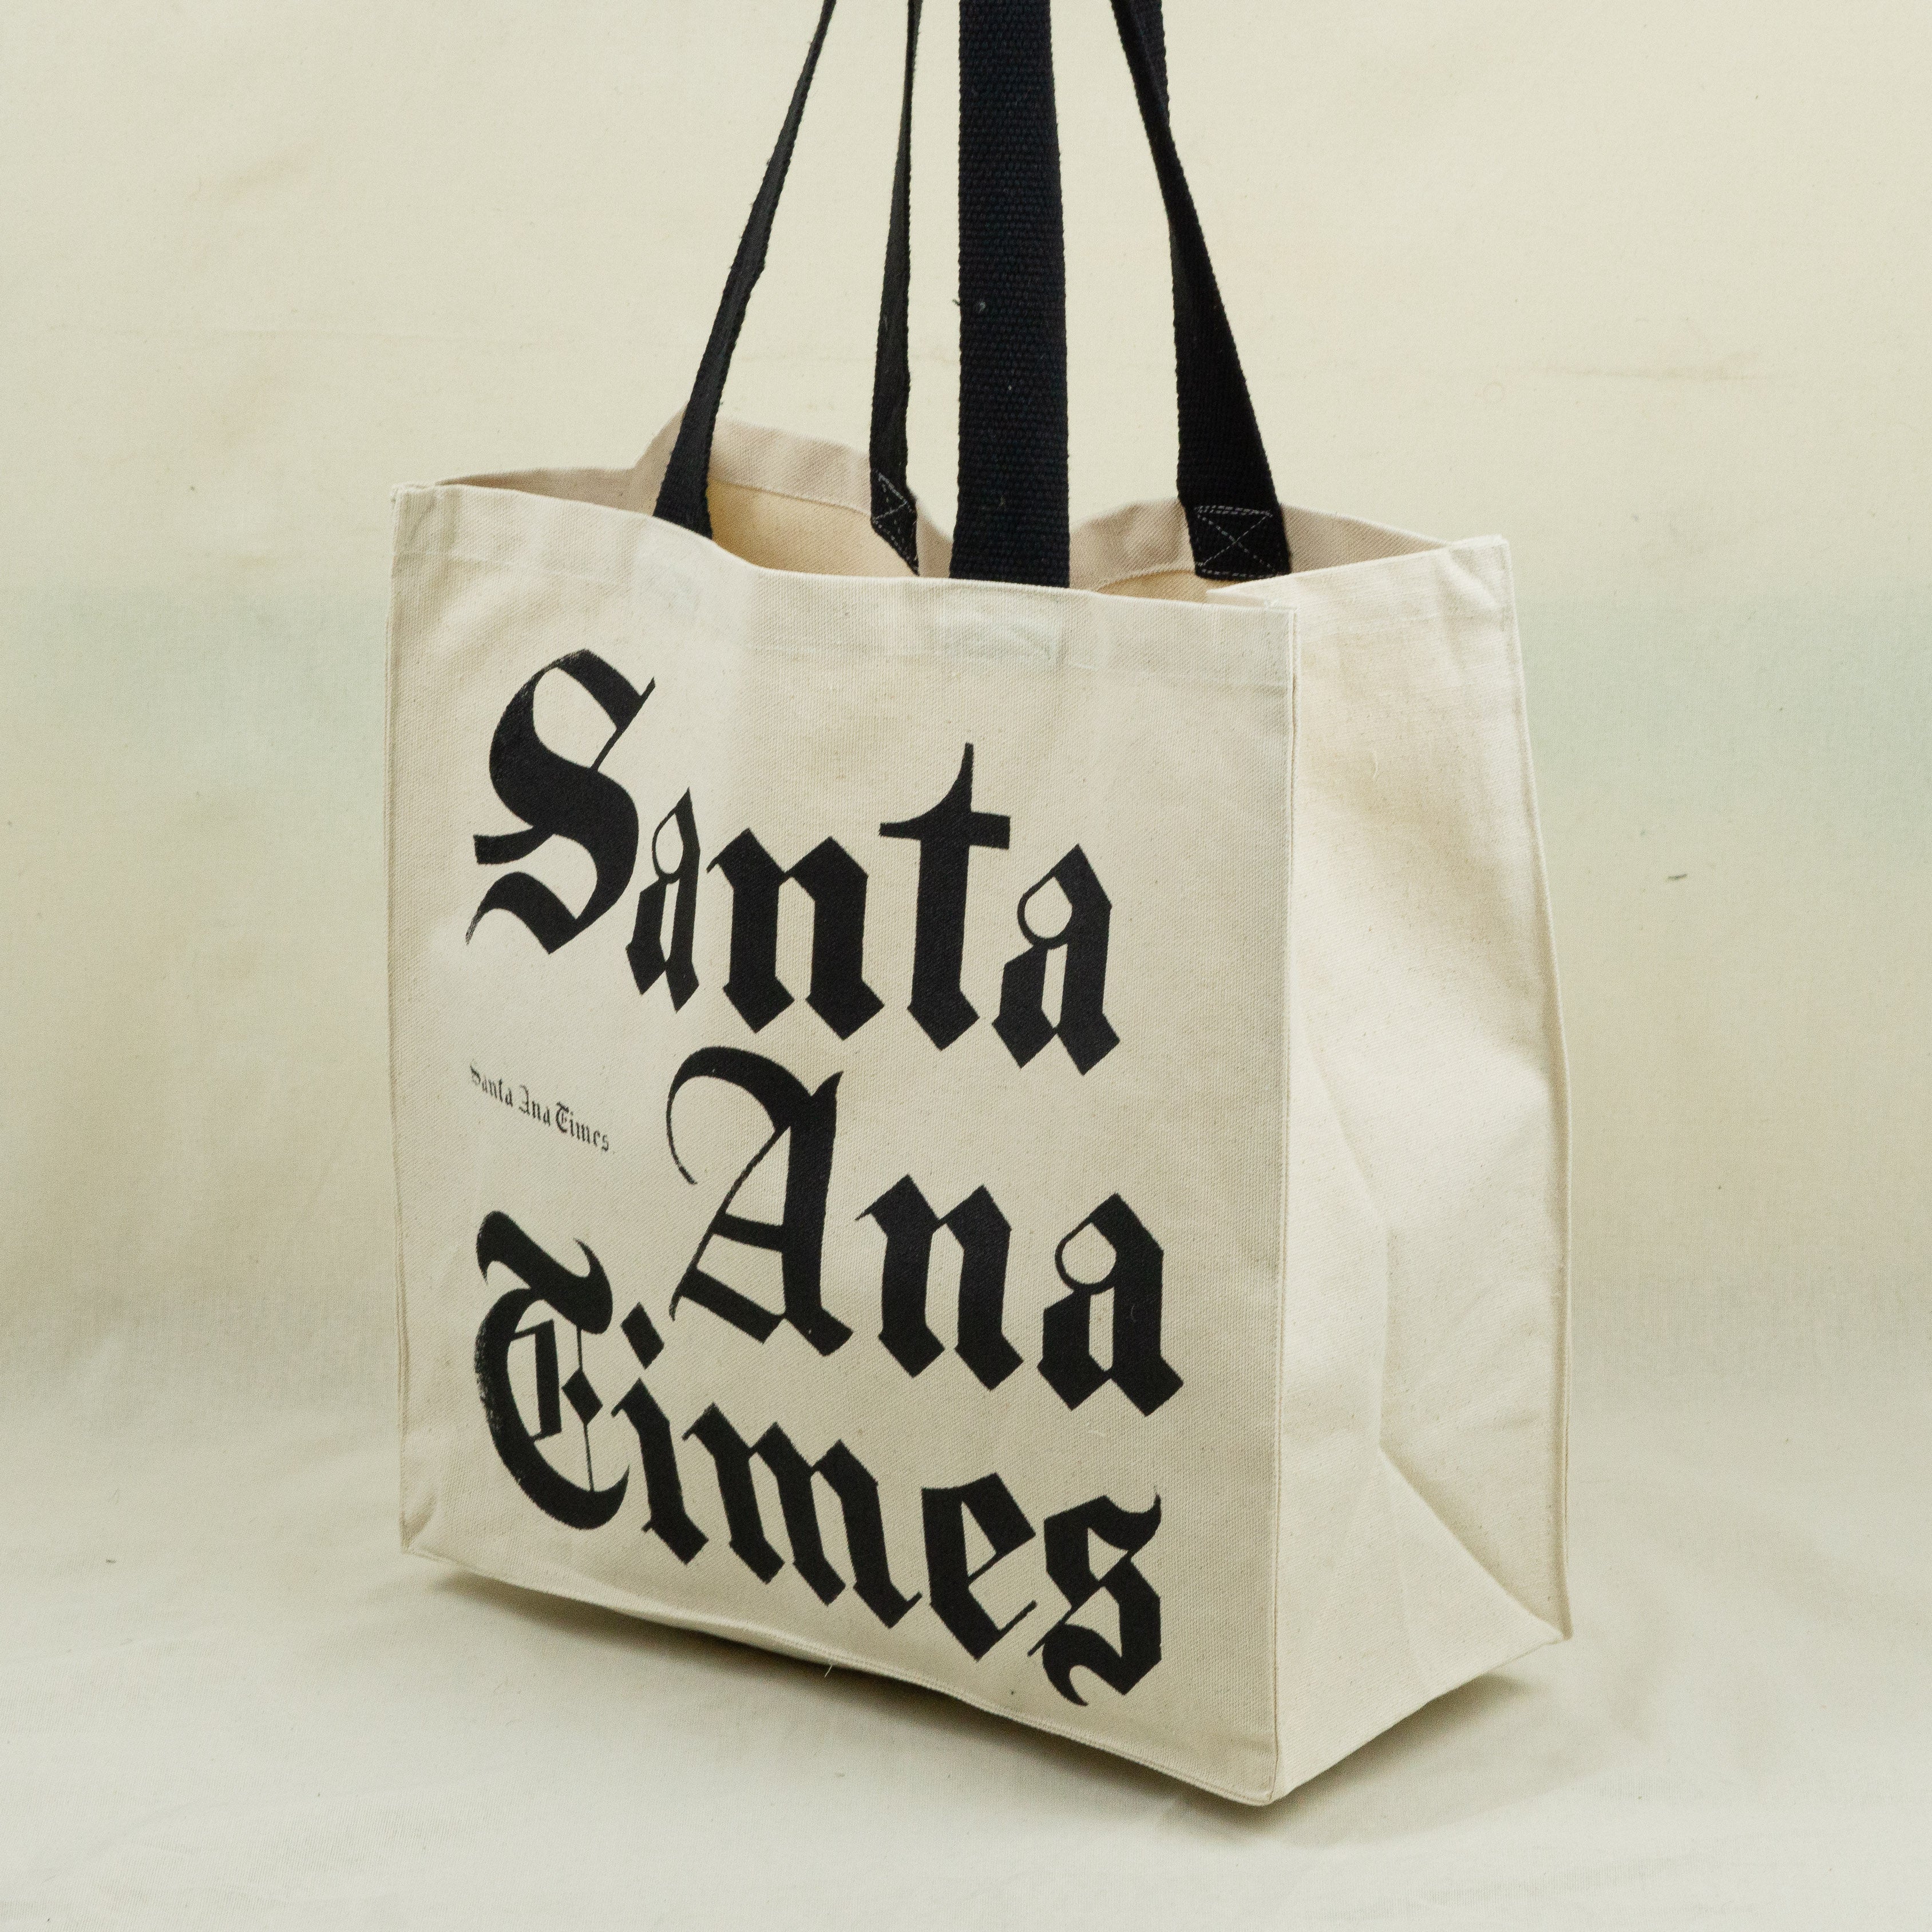 Santa Ana Times tote bag